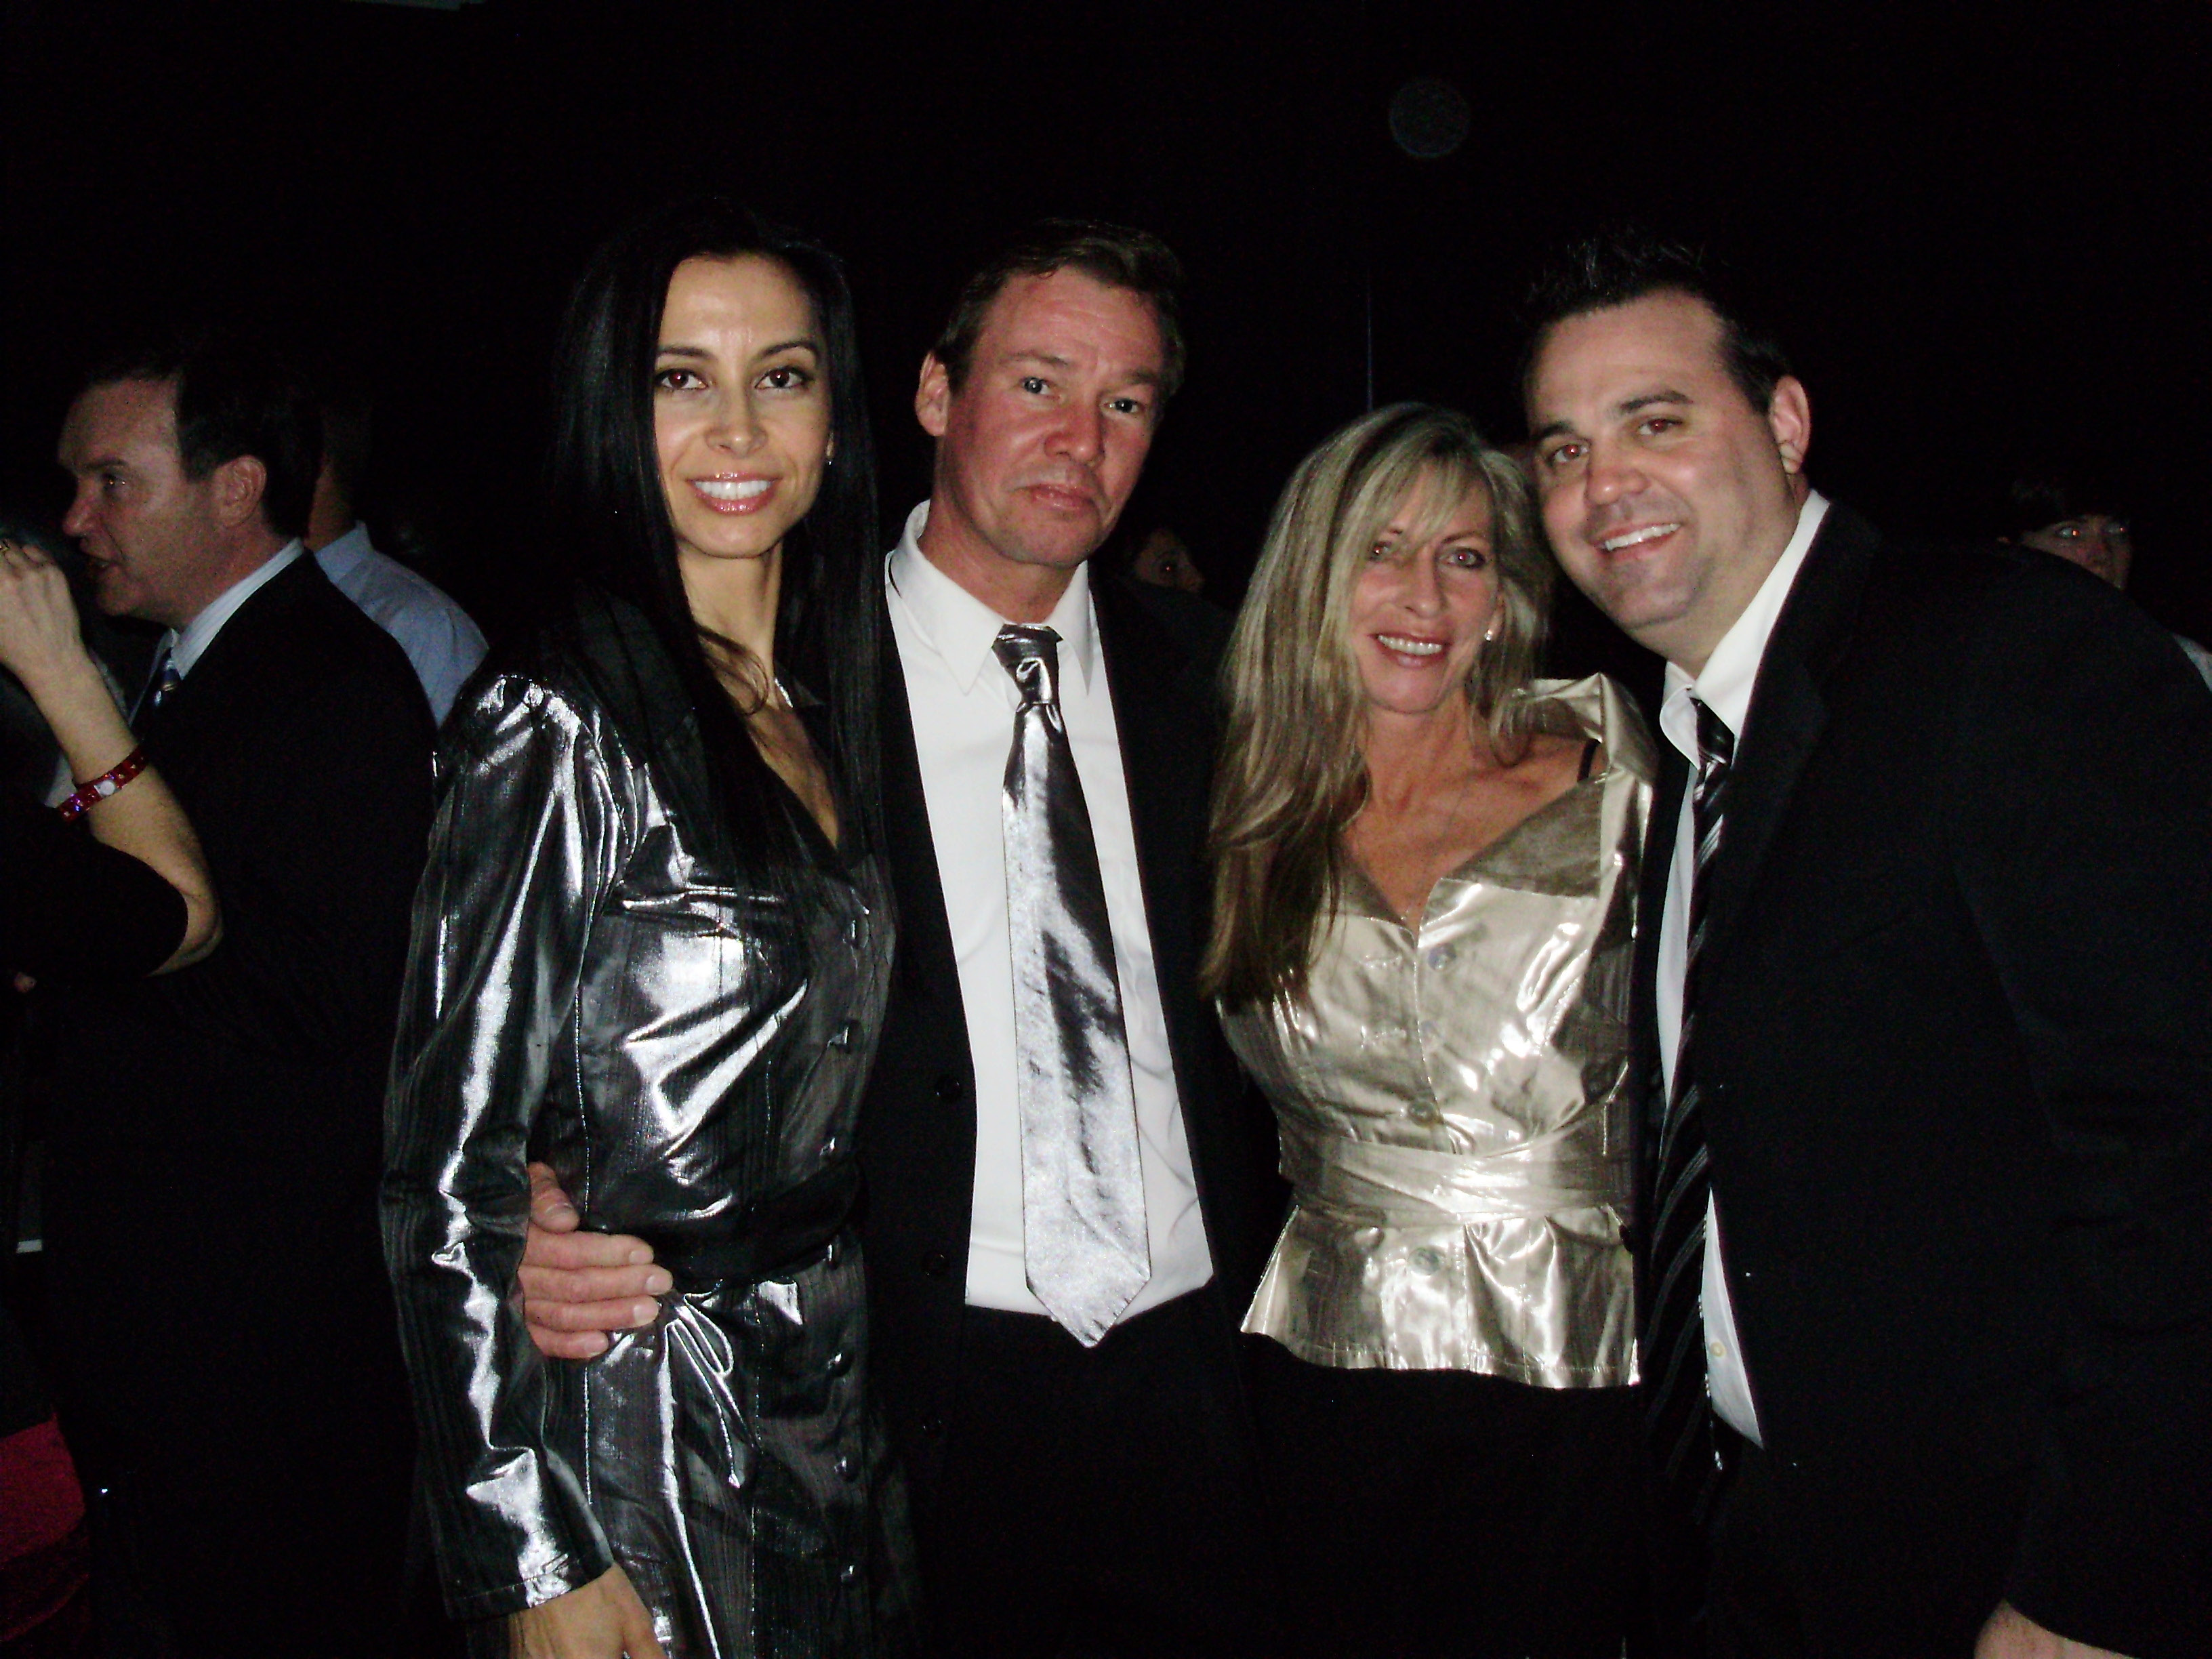 Jennifer Gjulameti, Arthur Wahlberg, Susan Darian, and Chuck Slavin. (Women's outfits by KAREN WARREN. Matching Silver Metalic tie by 2-HIP.) THE FIGHTER.